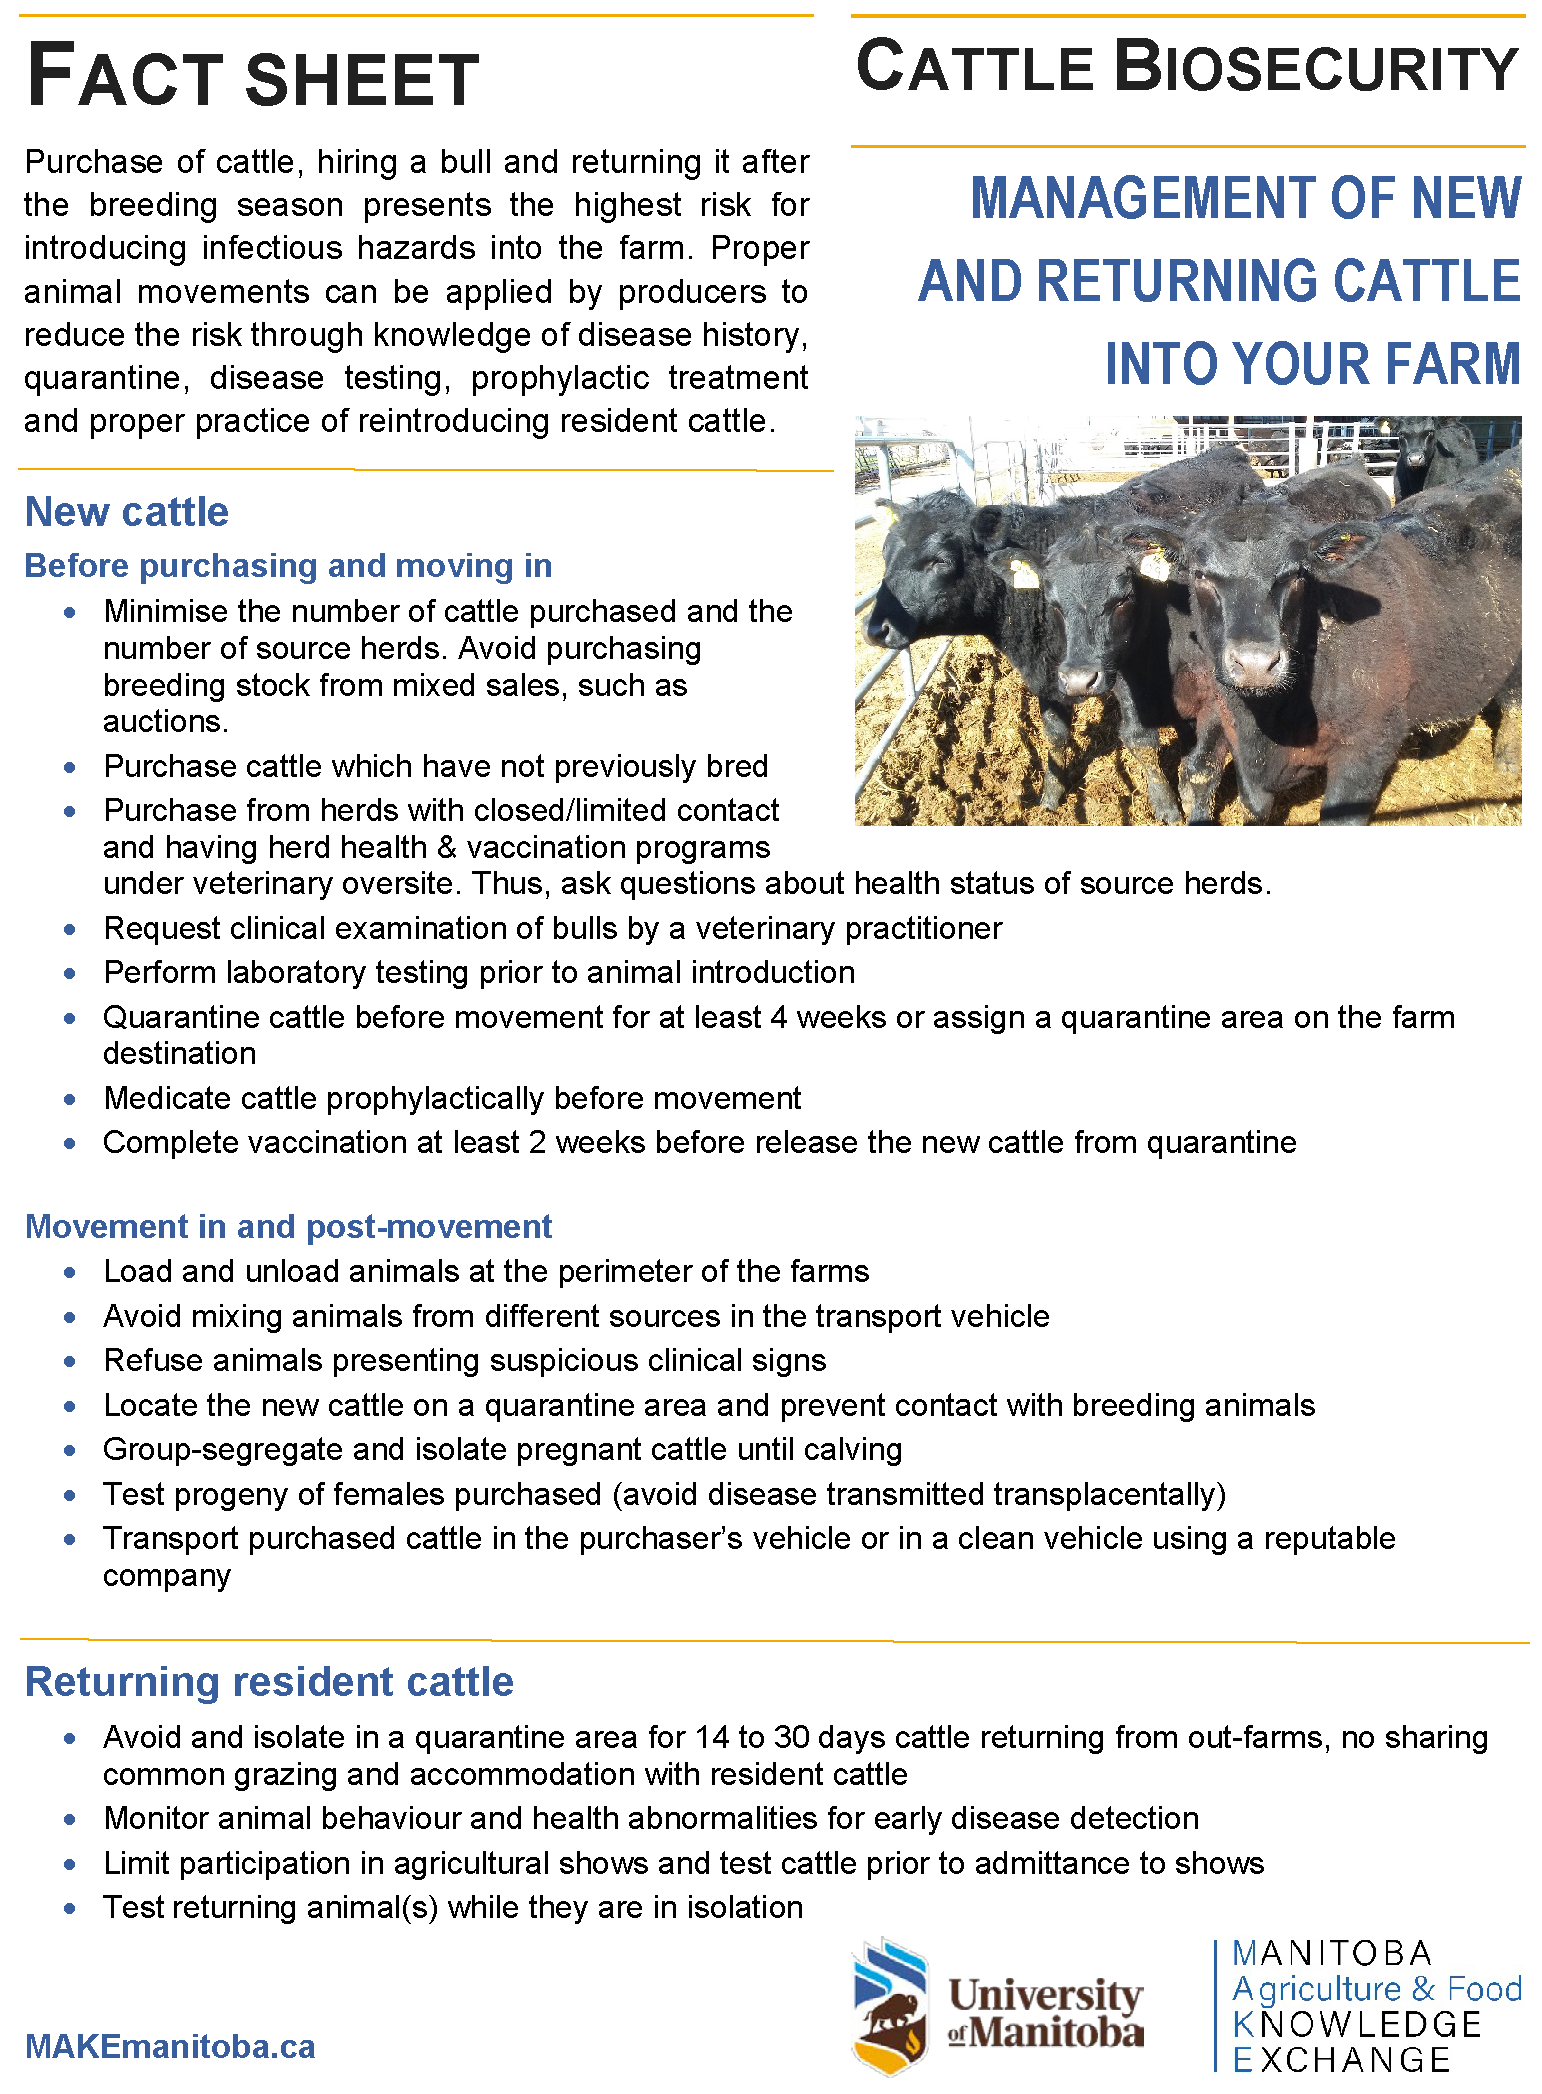 MAKE fact sheet cattle biosecurity